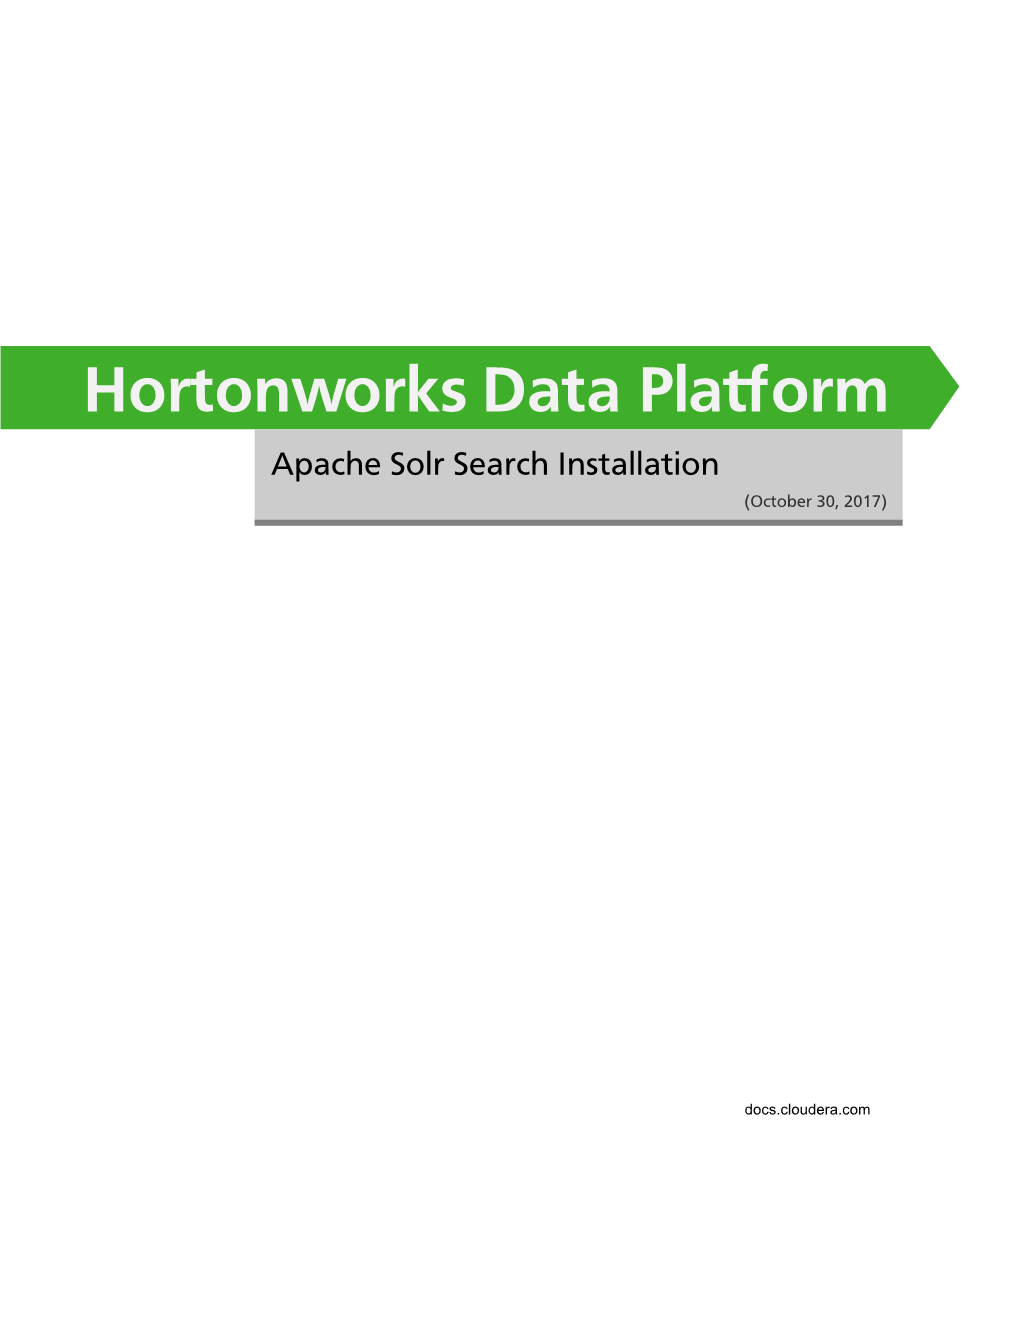 Hortonworks Data Platform Apache Solr Search Installation (October 30, 2017)